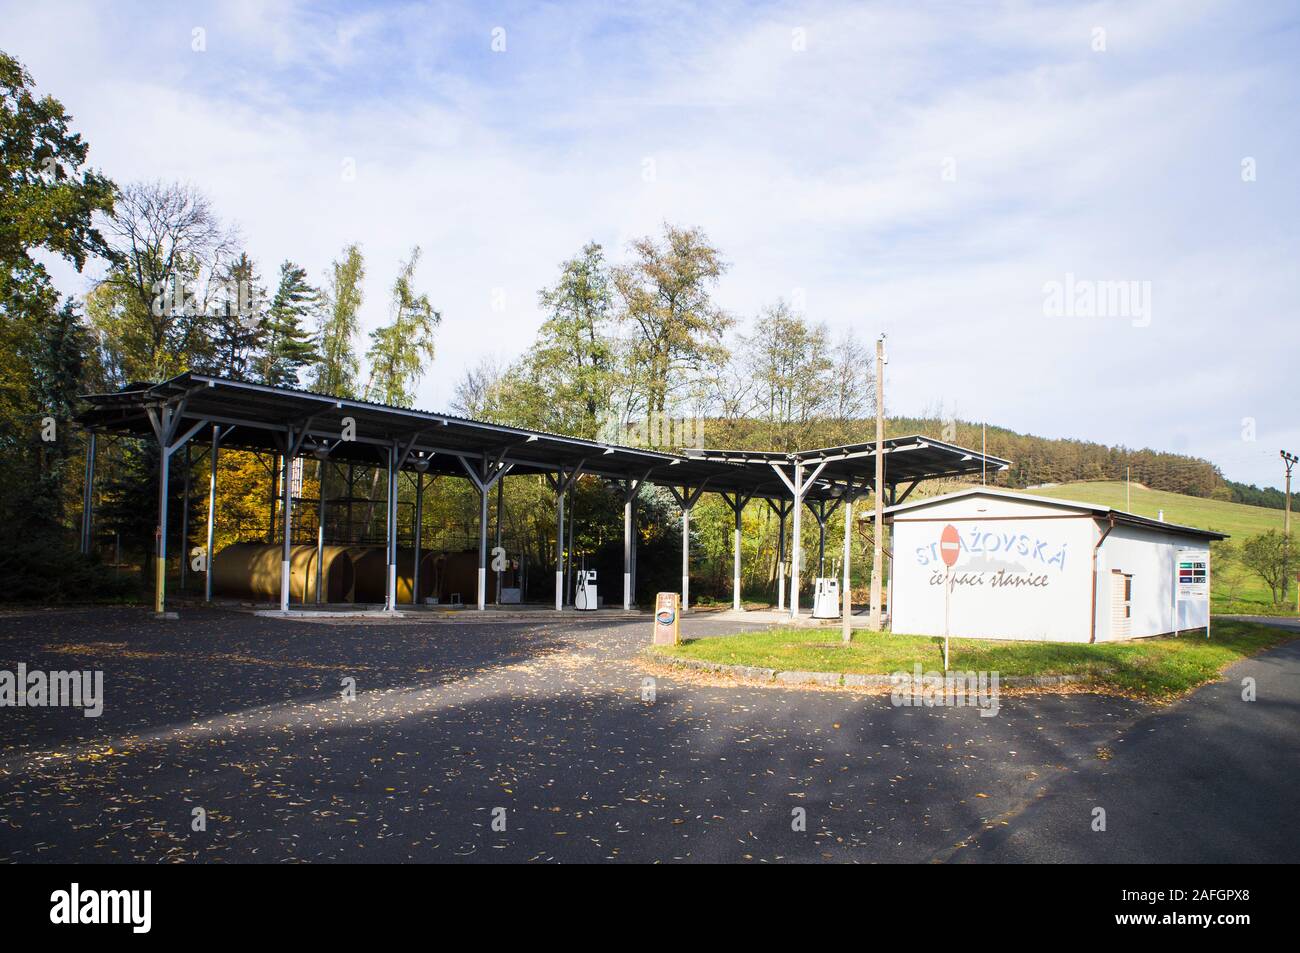 The Strazov petrol station in the town of Strazov (Drosau), near Klatovy, Plzen Region, Czech Republic, on October 27, 2019. (CTK Photo/Libor Sojka) Stock Photo